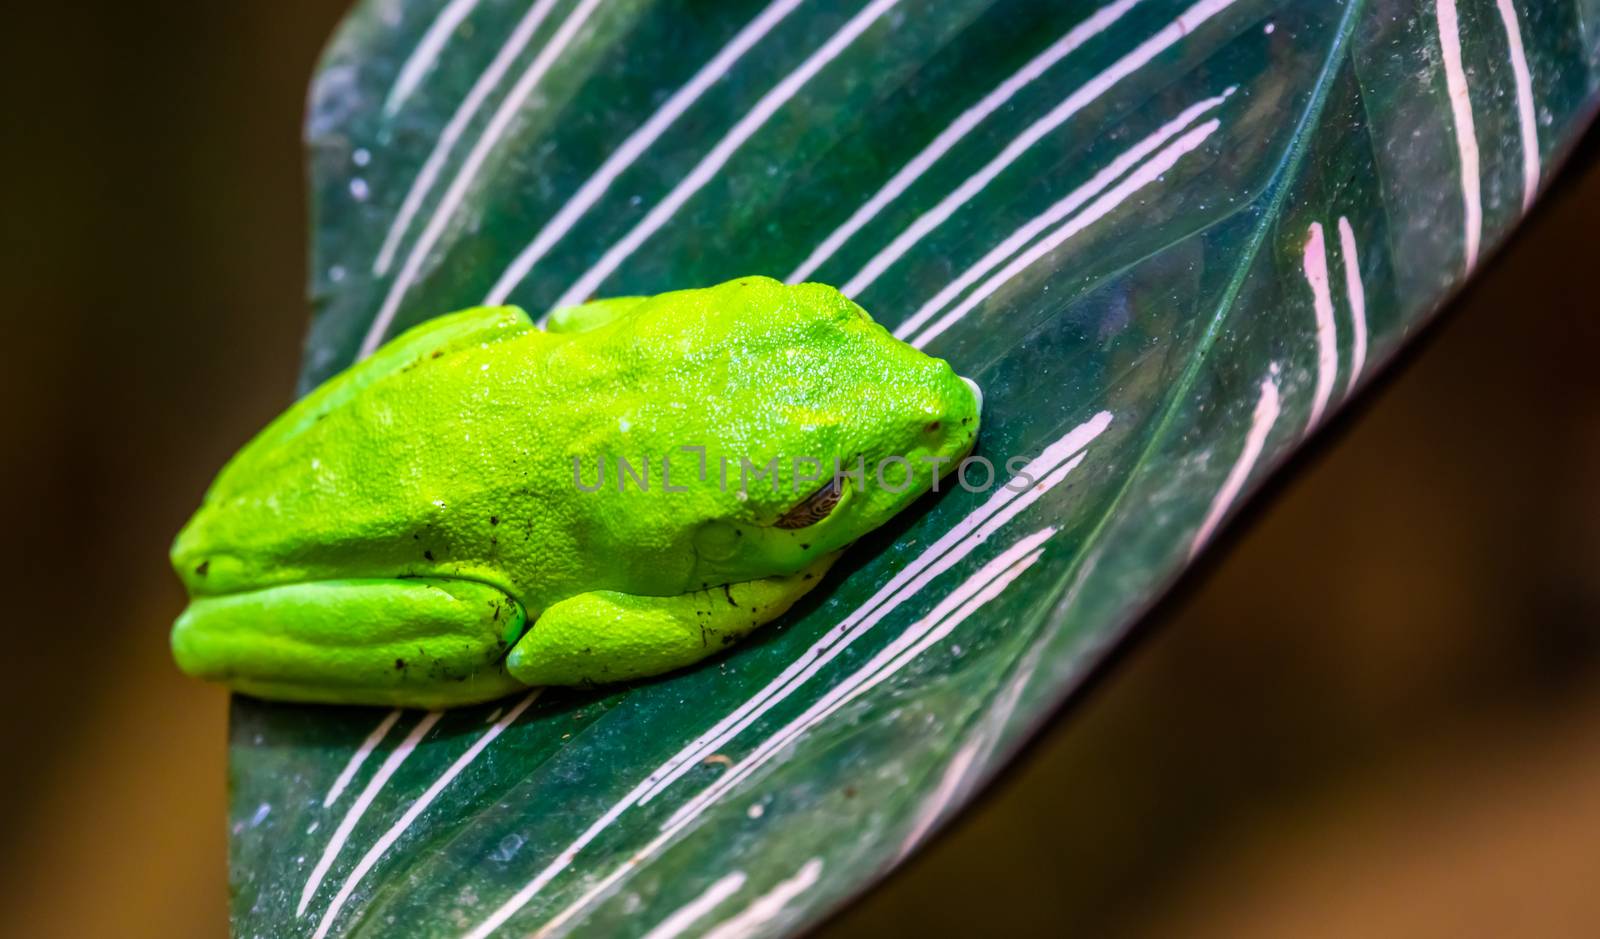 macro closeup of a red eyed tree frog sitting on a leaf, tropical amphibi by charlottebleijenberg